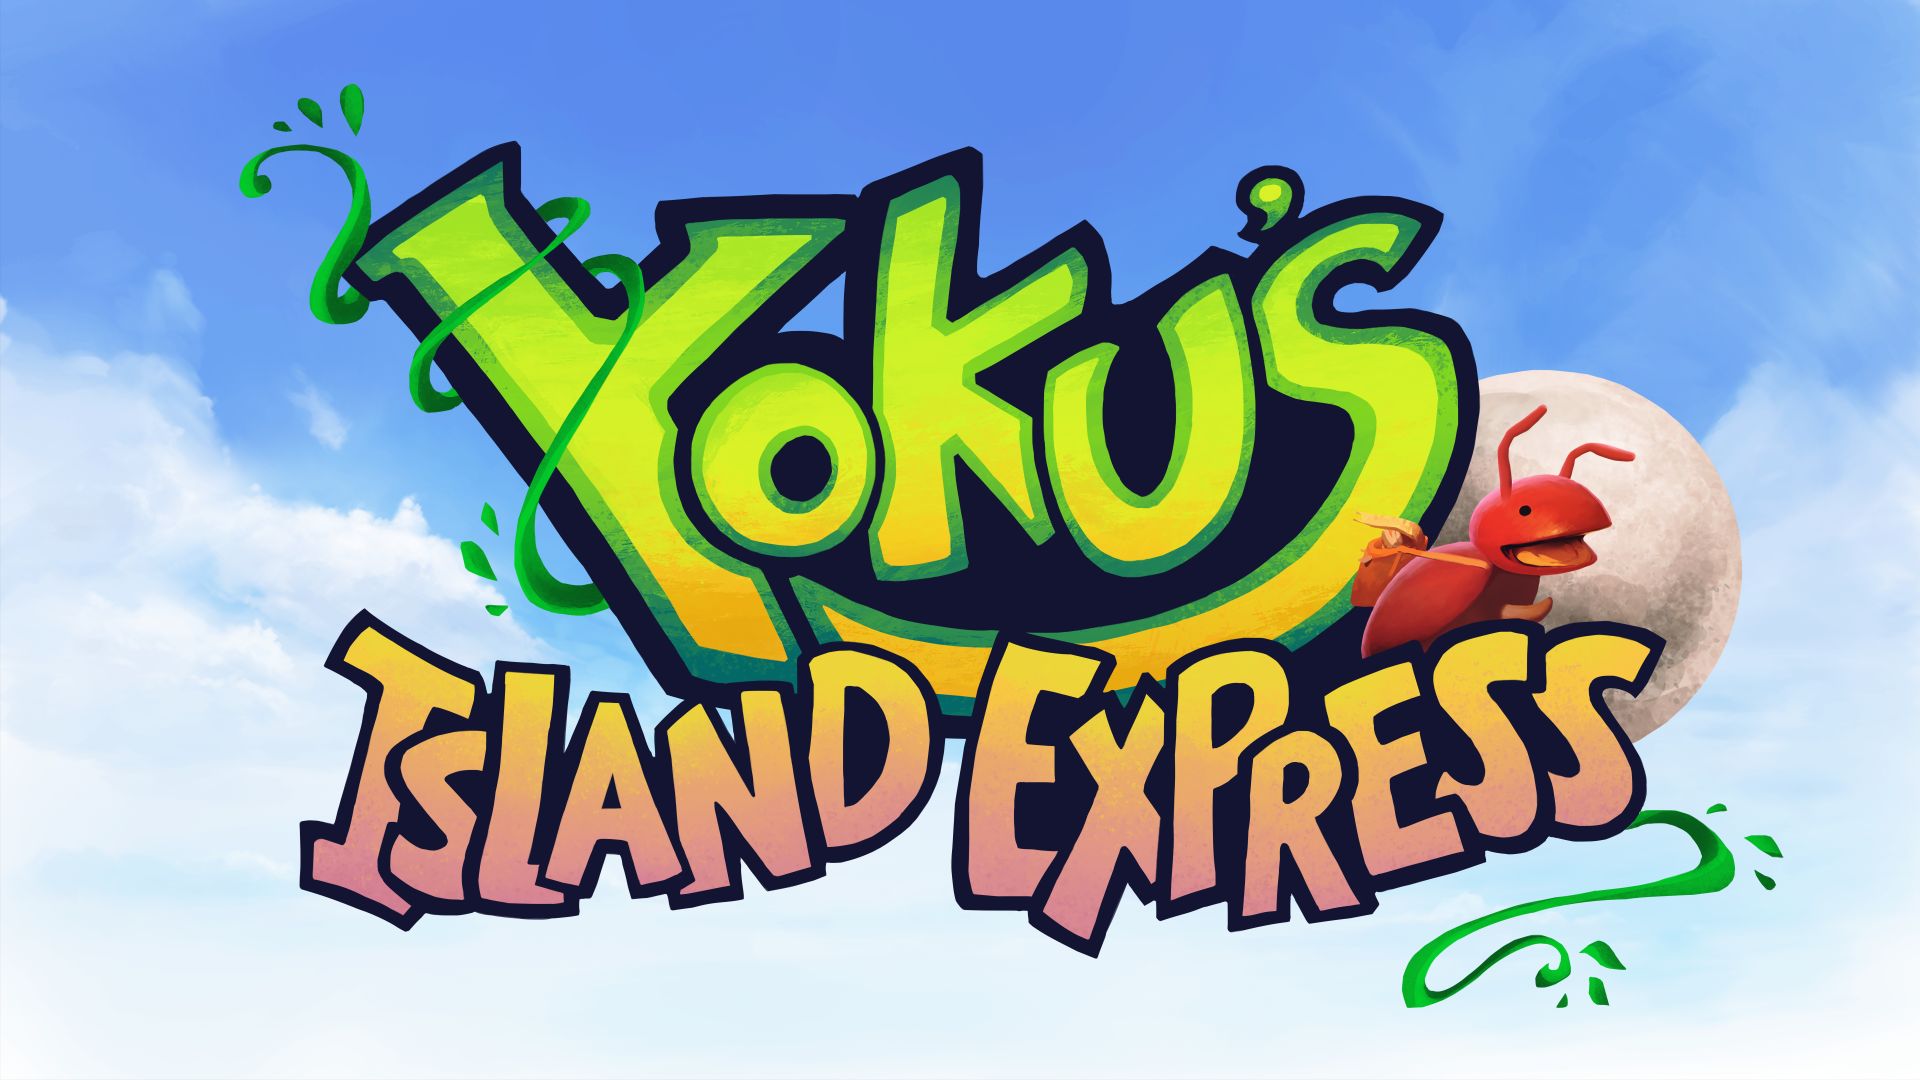 Yokus Island Express logo